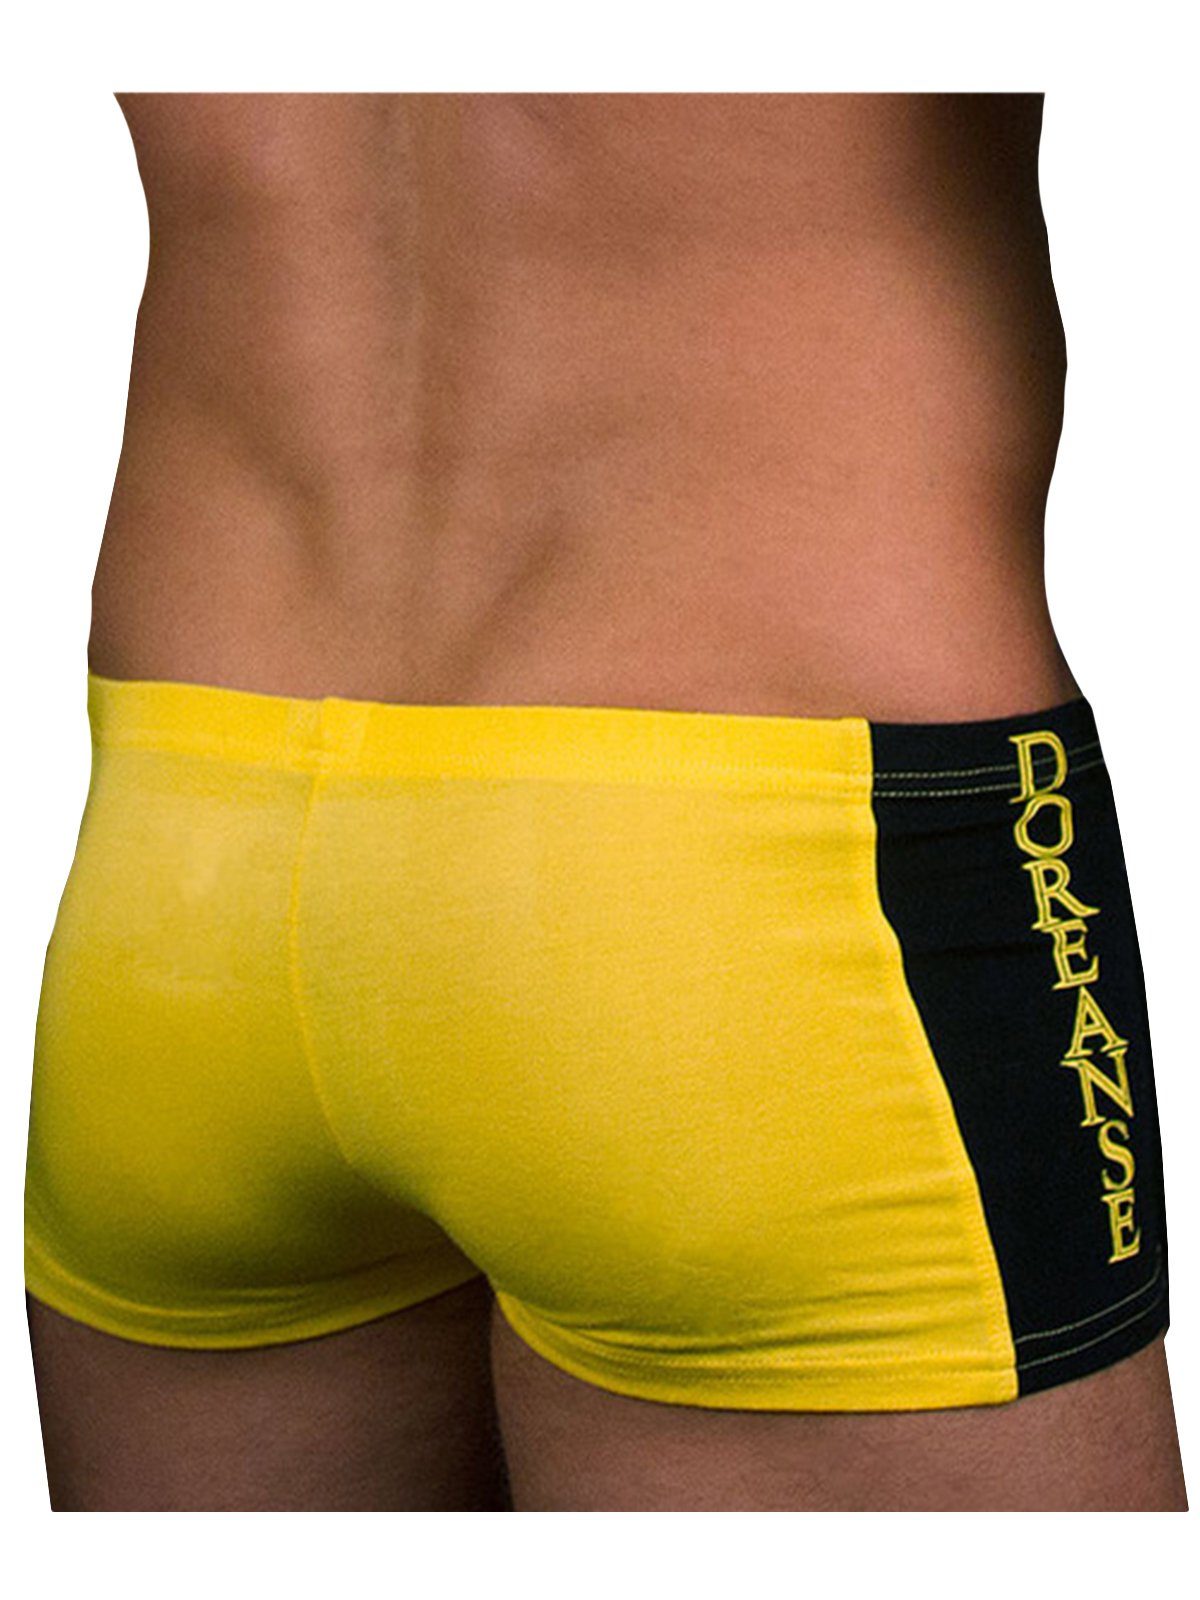 Doreanse Underwear Hipster Herren original Gelb Pants, Boxer Doreanse Männer Trunk DA1599